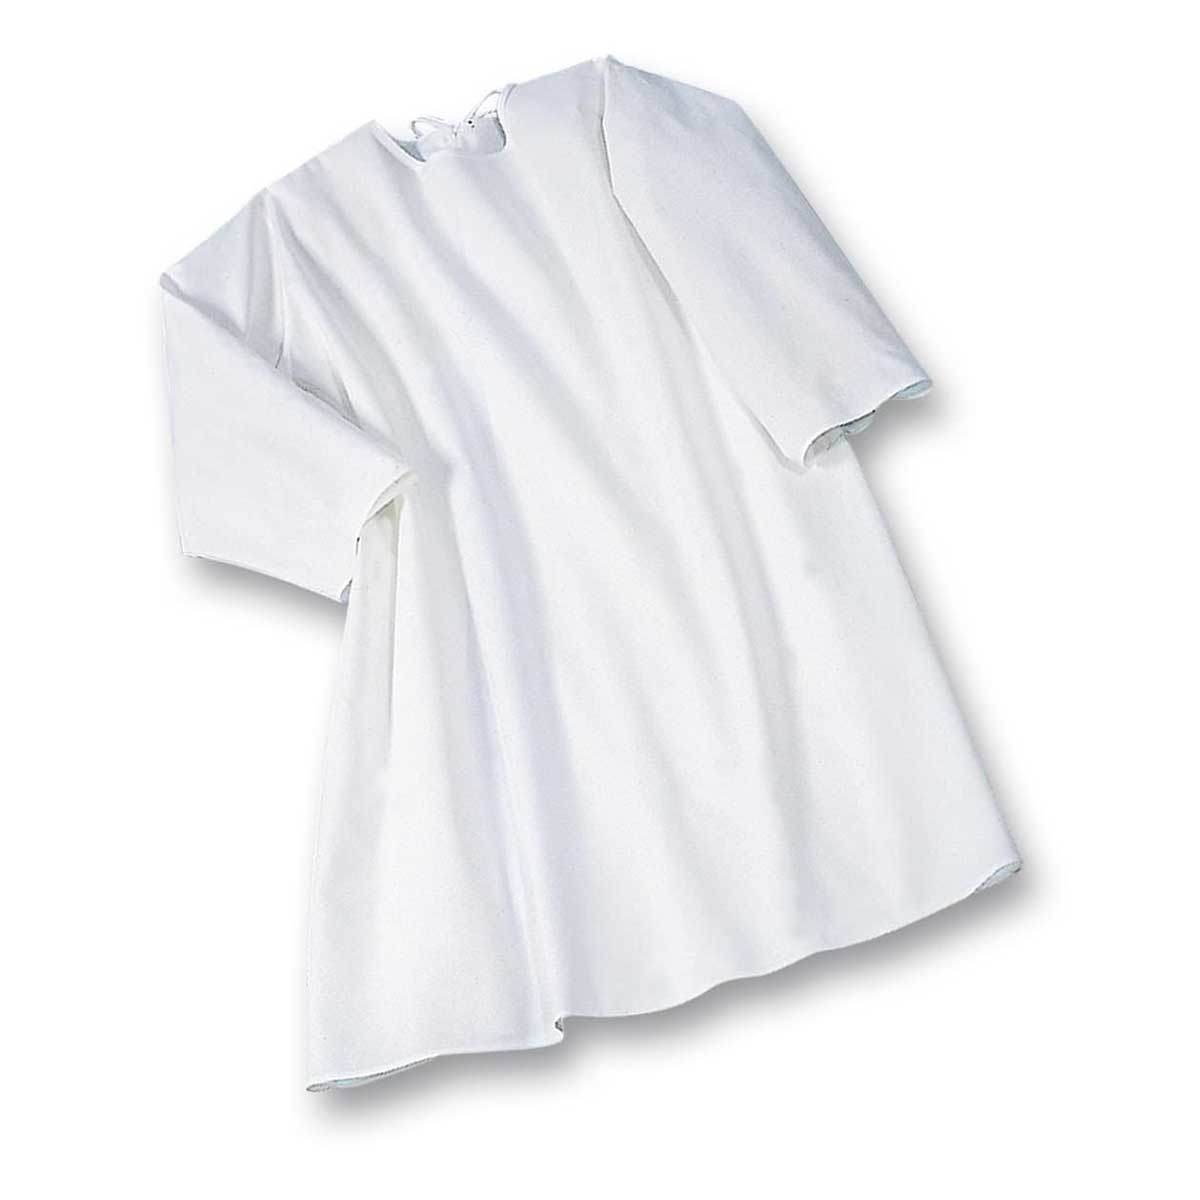 Suprima nursing shirt cotton - long sleeve No. 4061